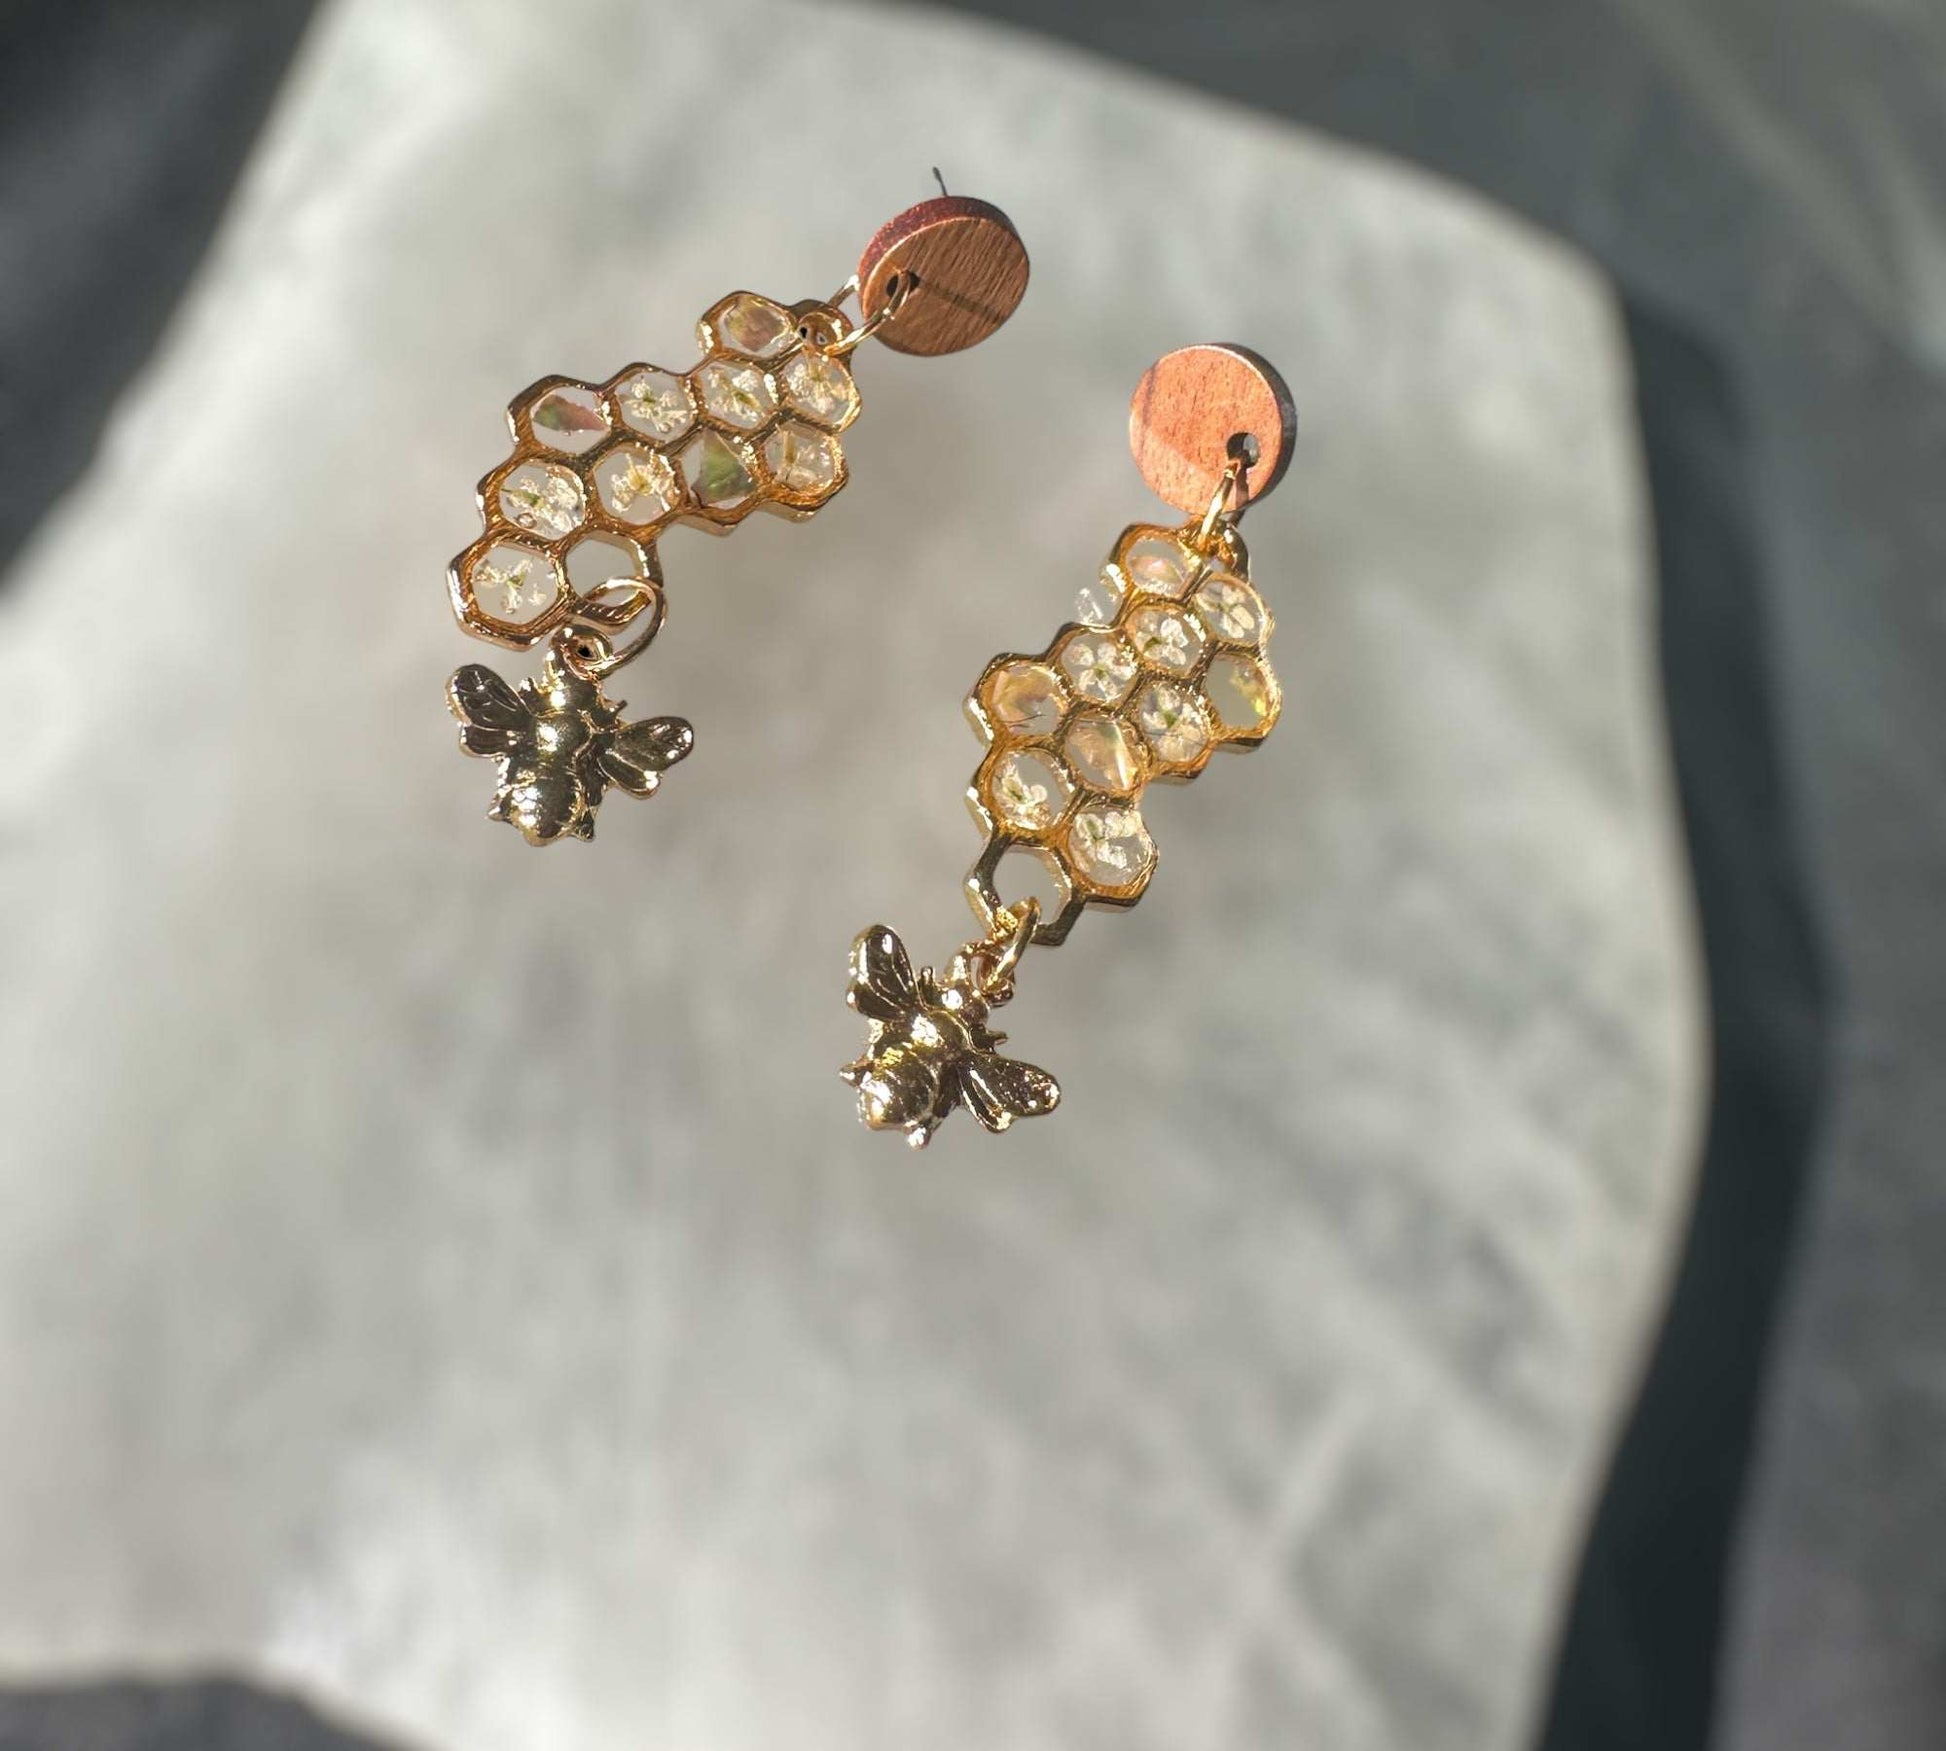 Bee Harmony Earring Set - Handmade Earrings with Pressed White Flowers